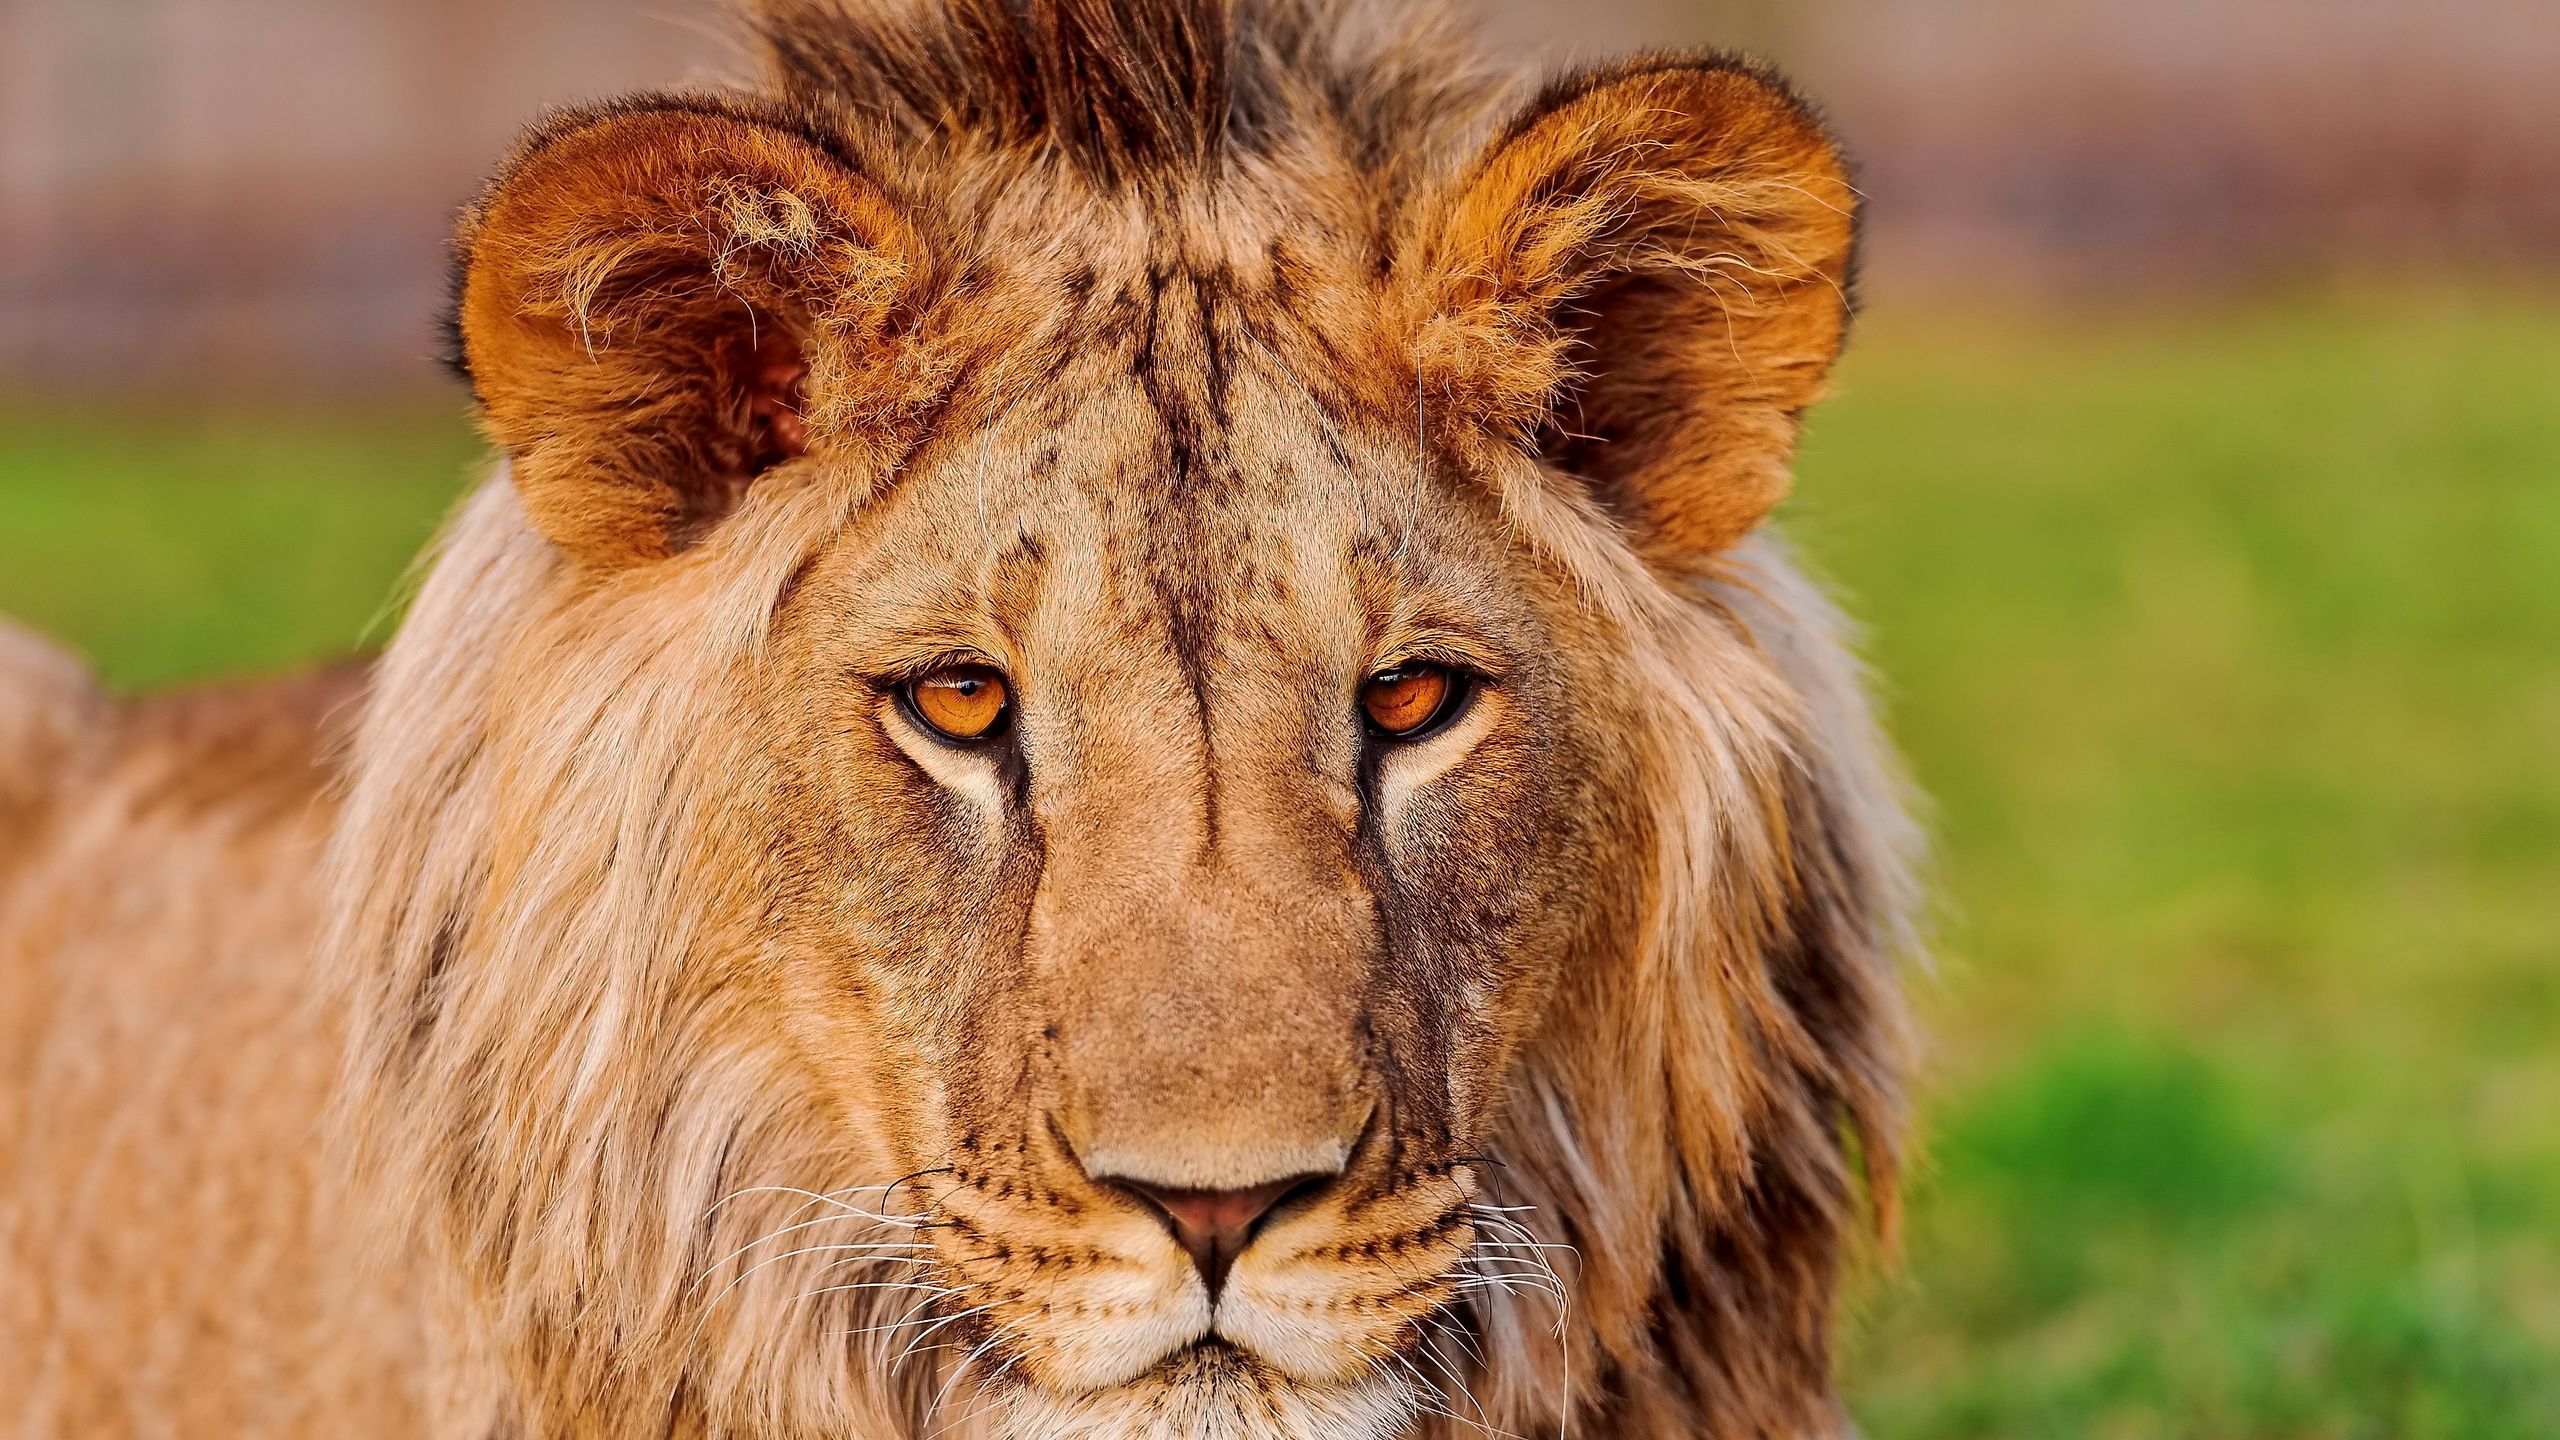 Download wallpaper 2560x1440 lion, face, eye, predator widescreen 16:9 HD background